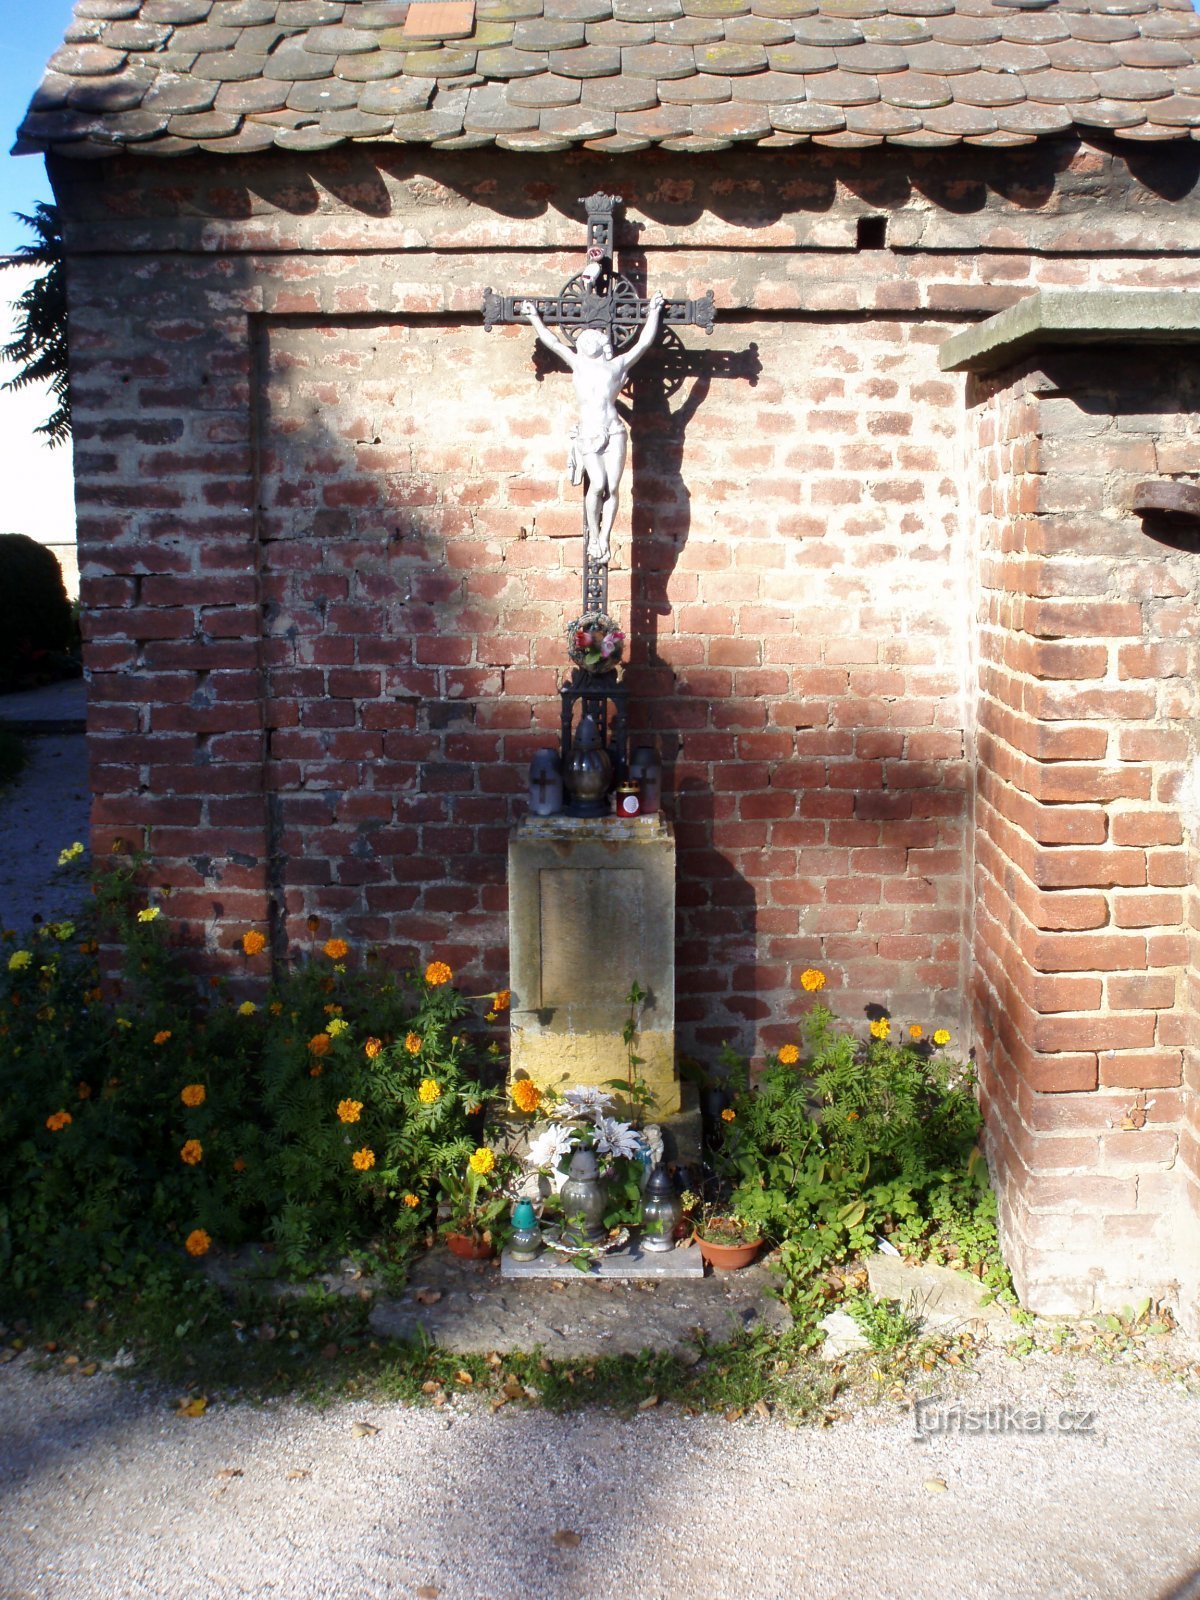 Grobljanski križ u izvornom dijelu groblja Novi Hradec Králové (Hradec Králové, 28.9.2011.)